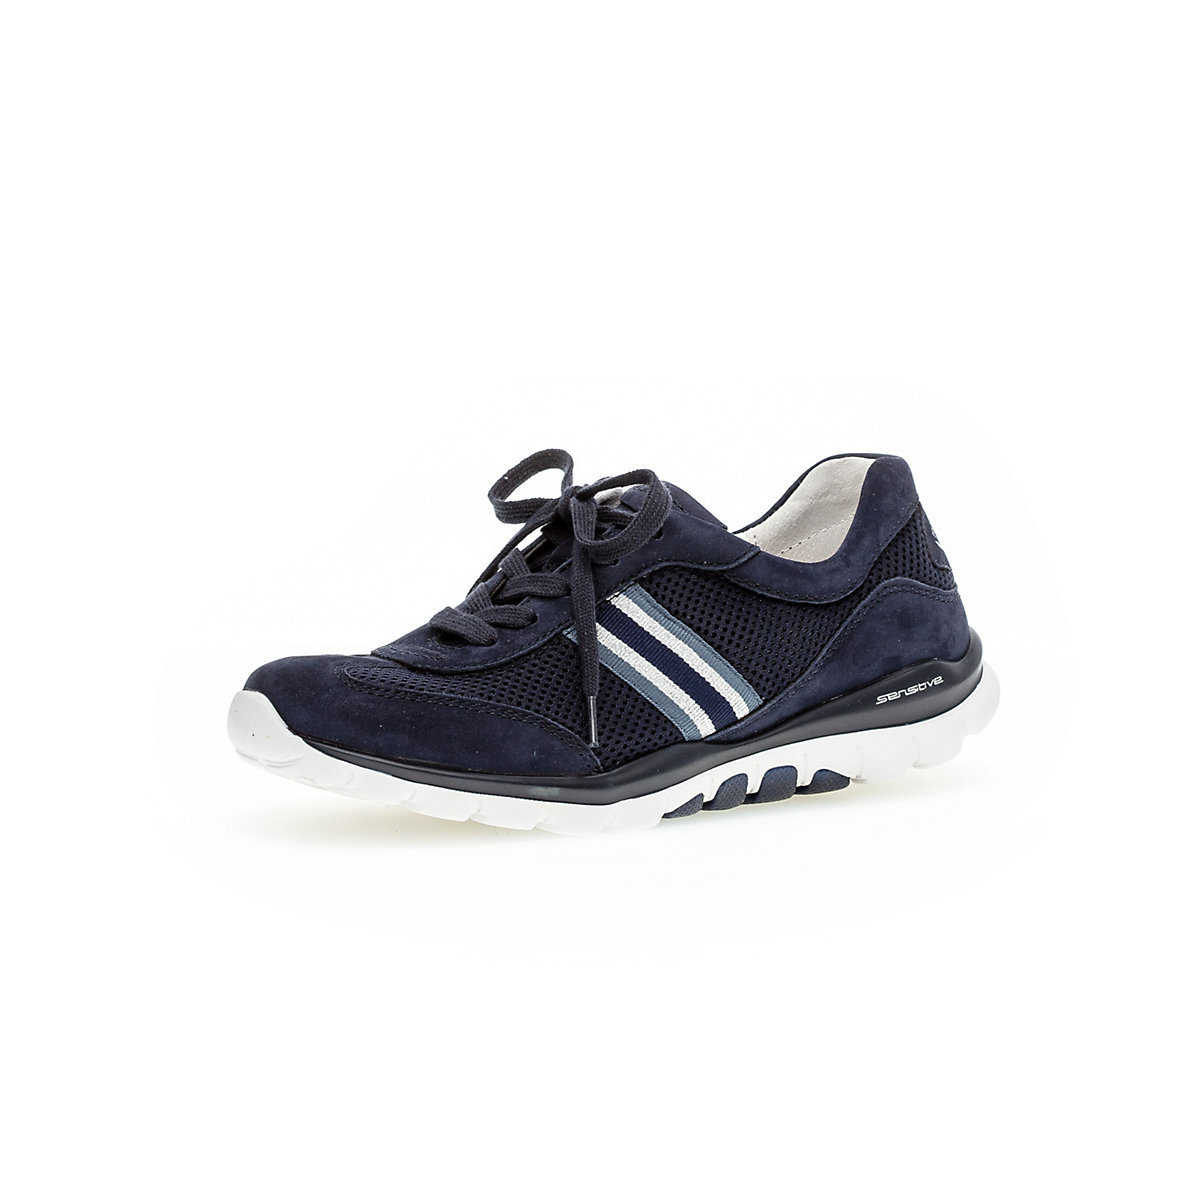 rollingsoft sensitive Rollingsoft Sneaker low Materialmix Leder/Lederimitat blau Sneakers Low blau